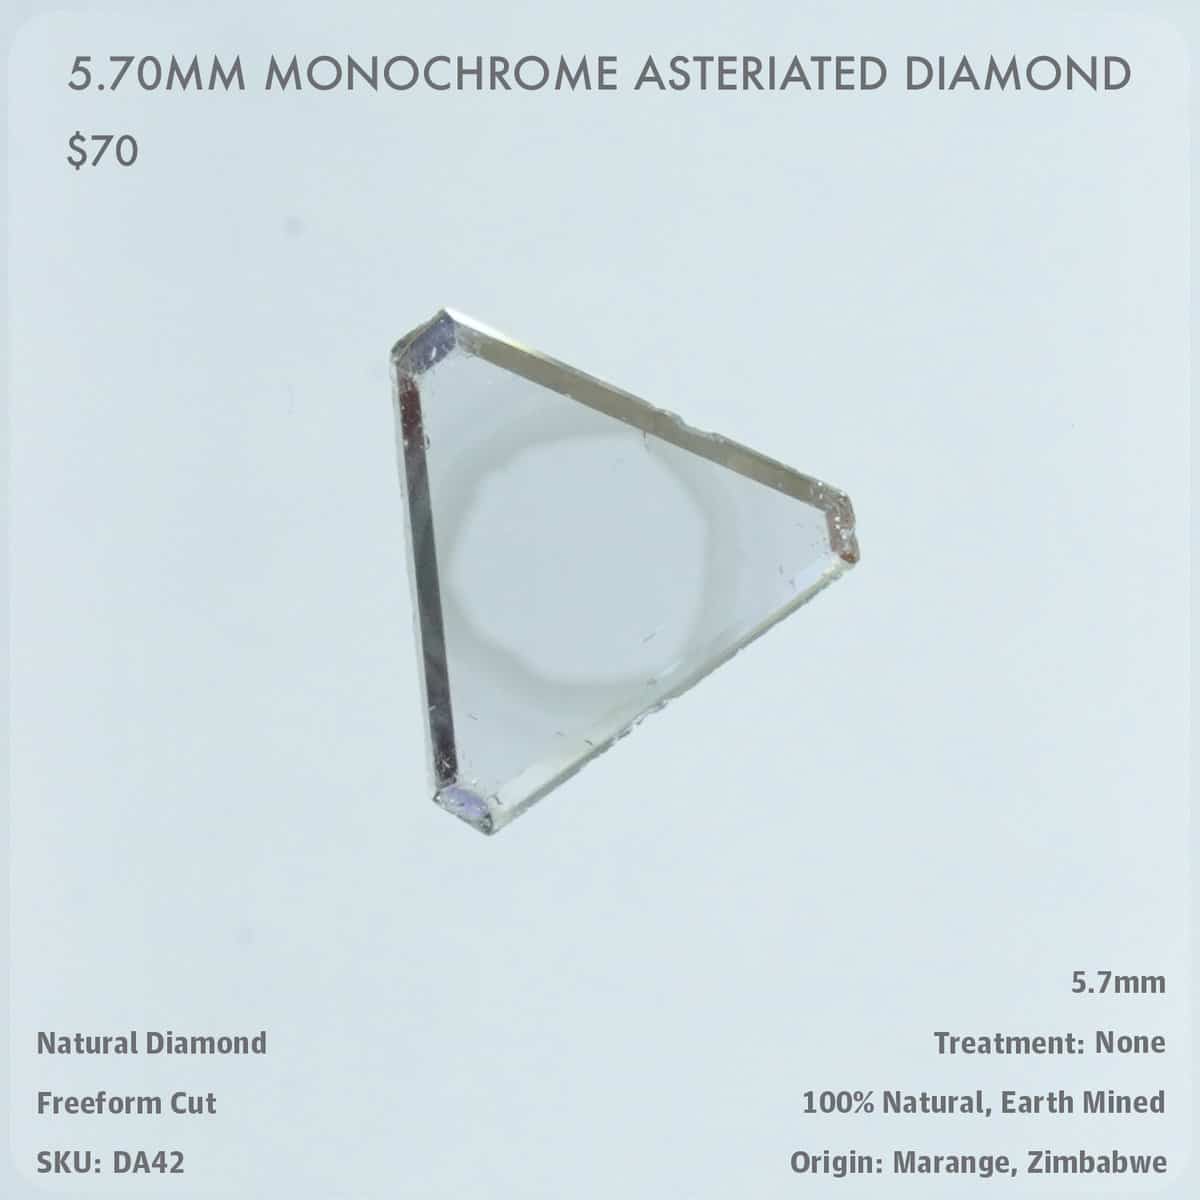 5.70mm Monochrome Asteriated Diamond